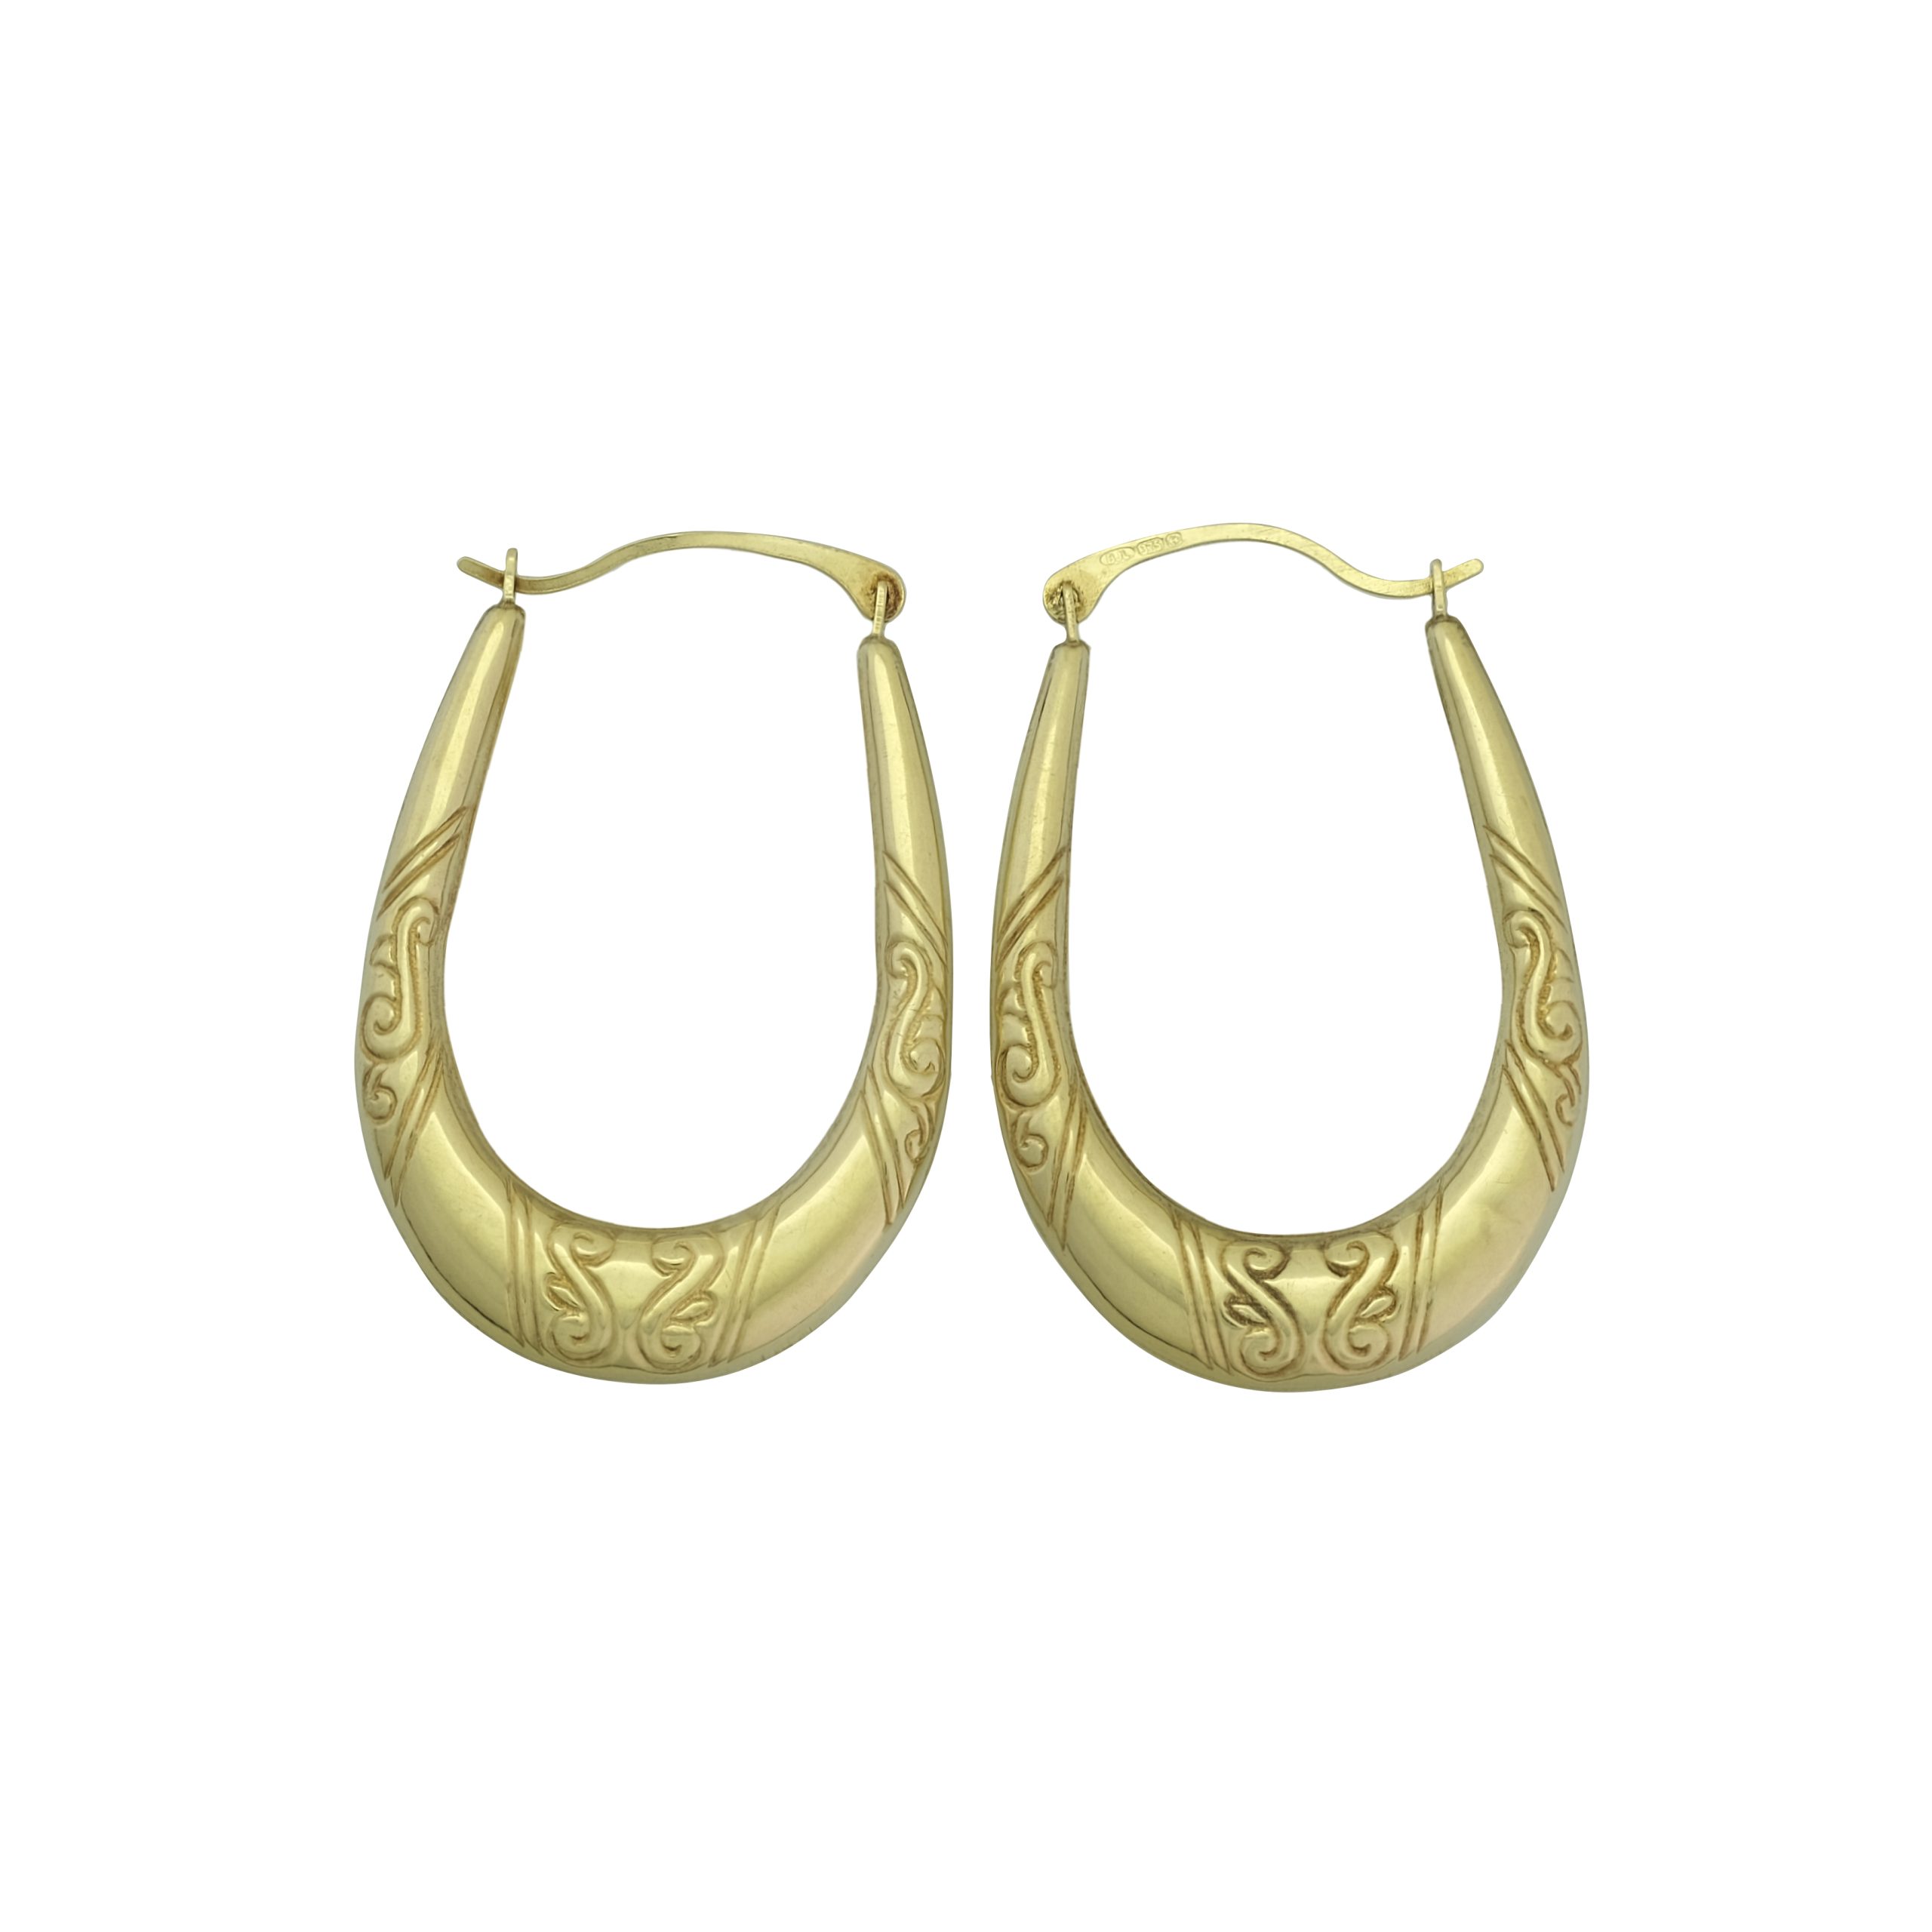 Buy Revere 9ct Gold Mini Creole Earrings - Set of 3 Pairs | Womens earrings  | Argos